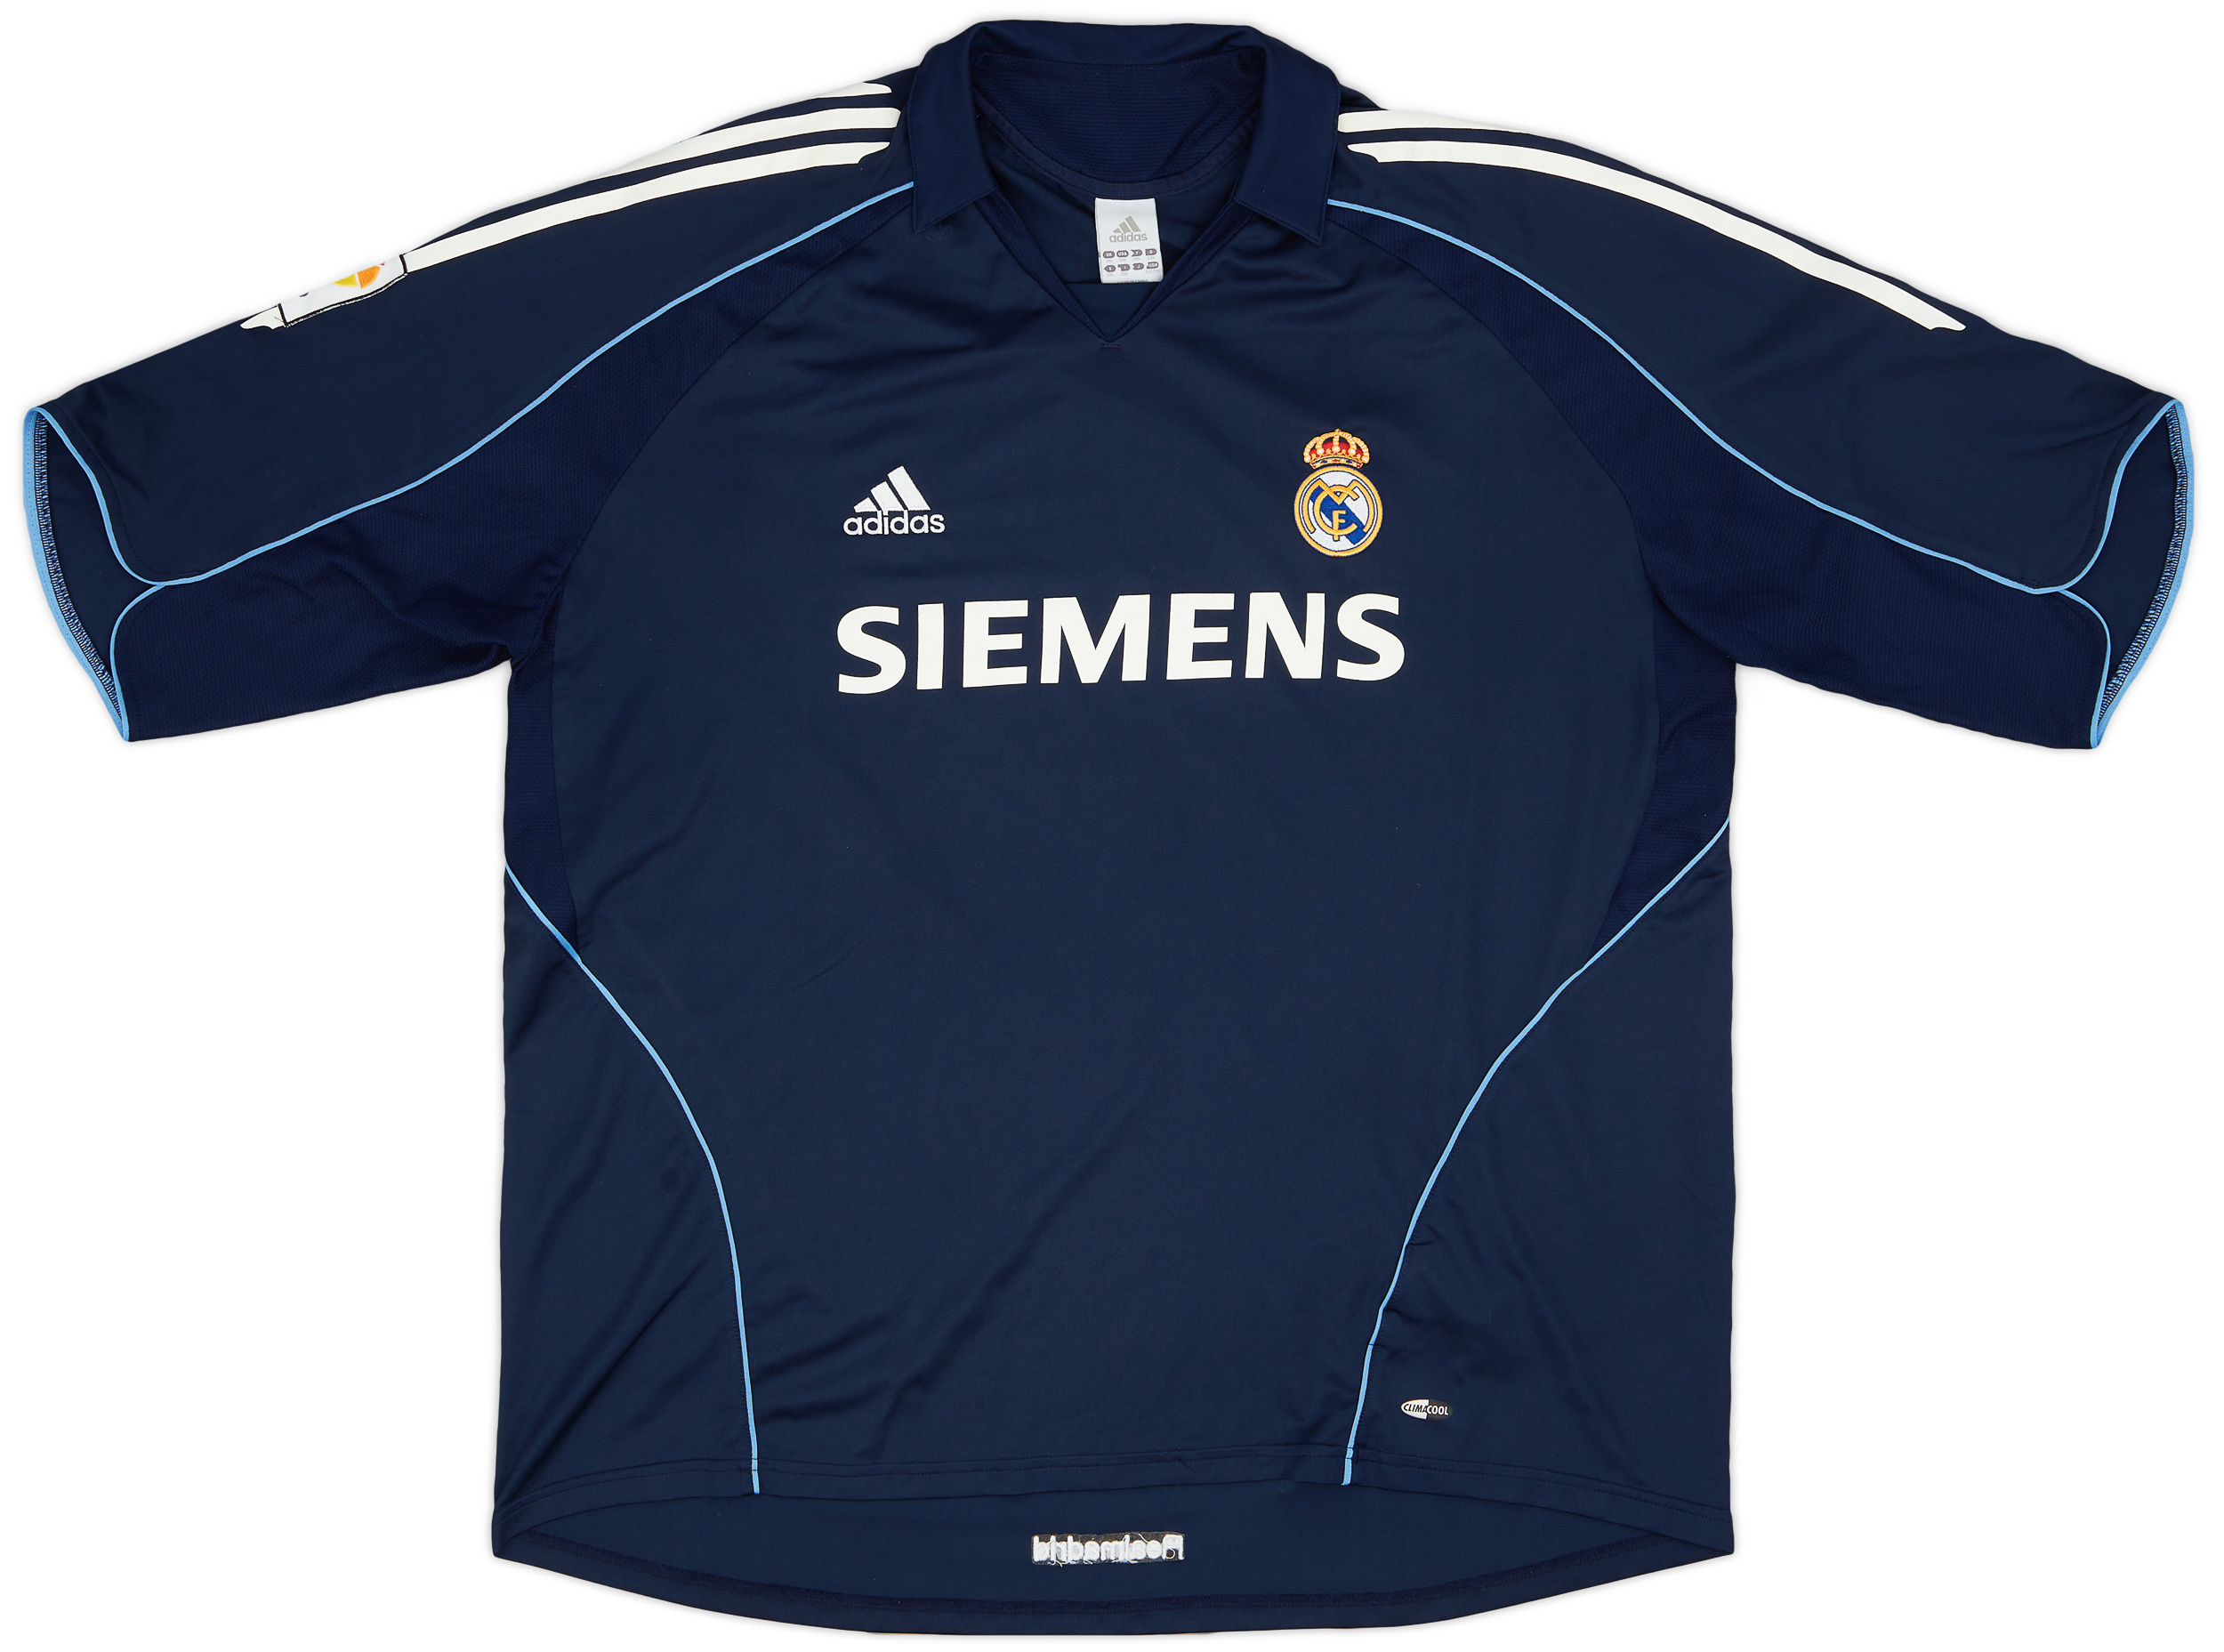 2005-06 Real Madrid Away Shirt - 9/10 - ()